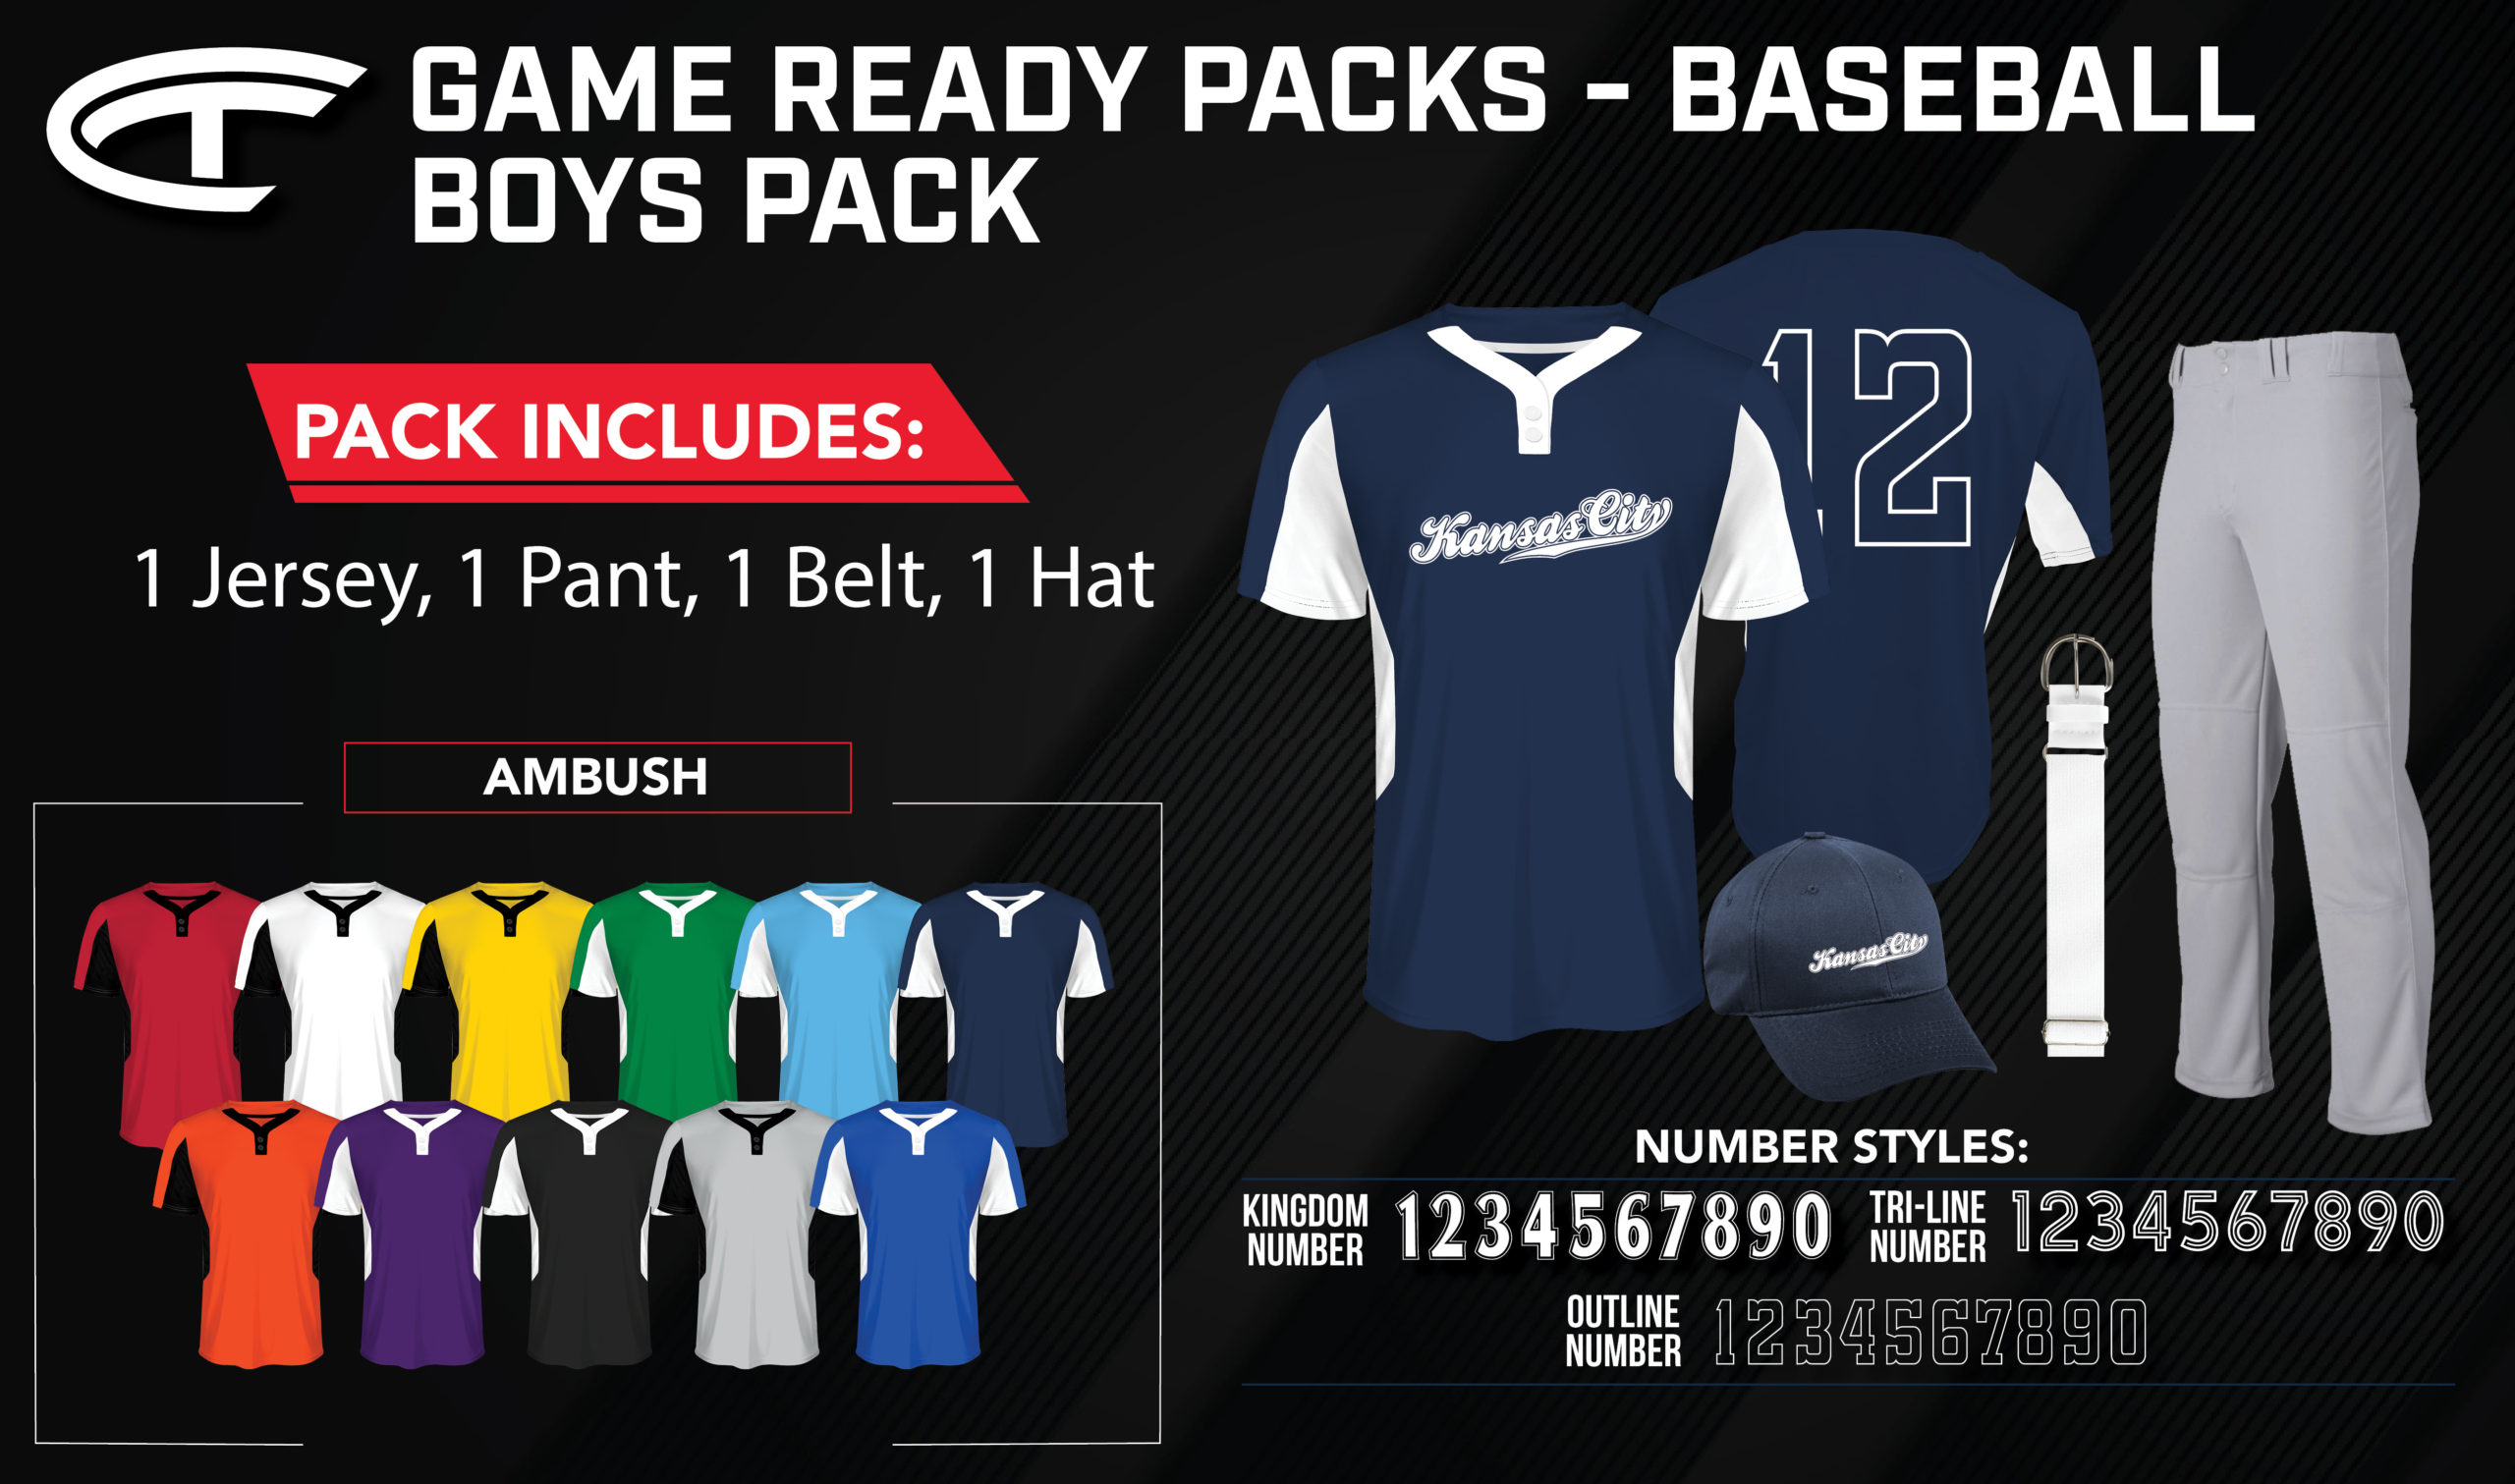 GameReadyPacks-Baseball-Eblast-Ambush